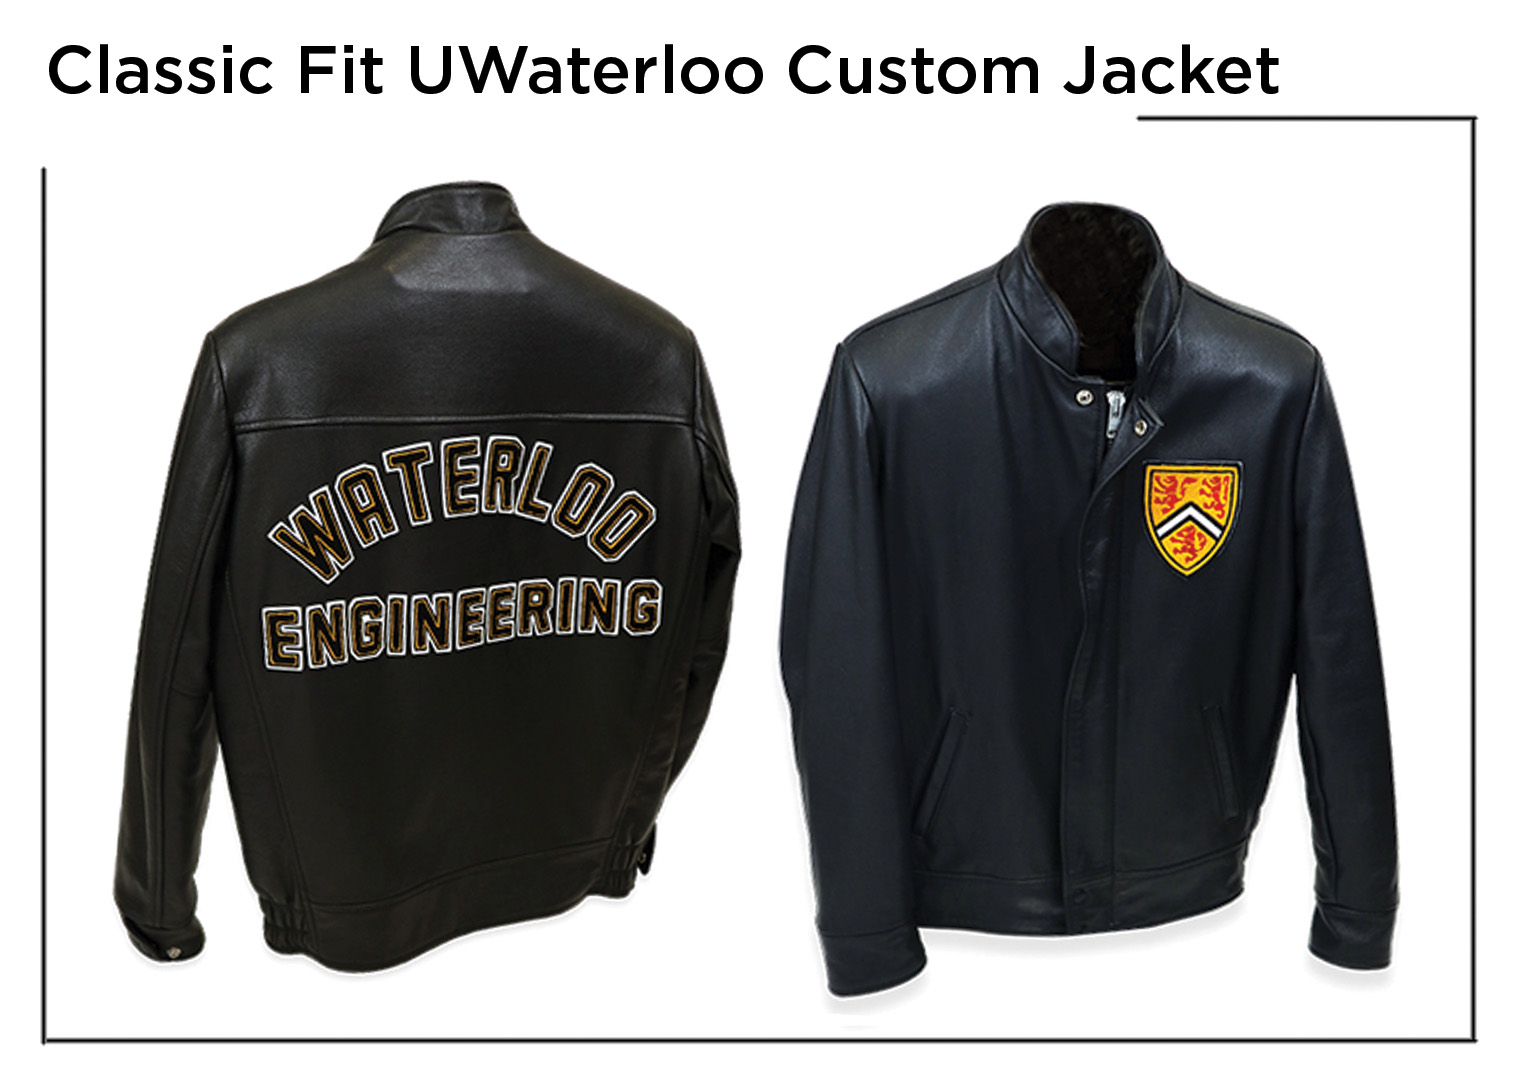 Men's UWaterloo Custom Jacket with University of Waterloo in felt letters on the back